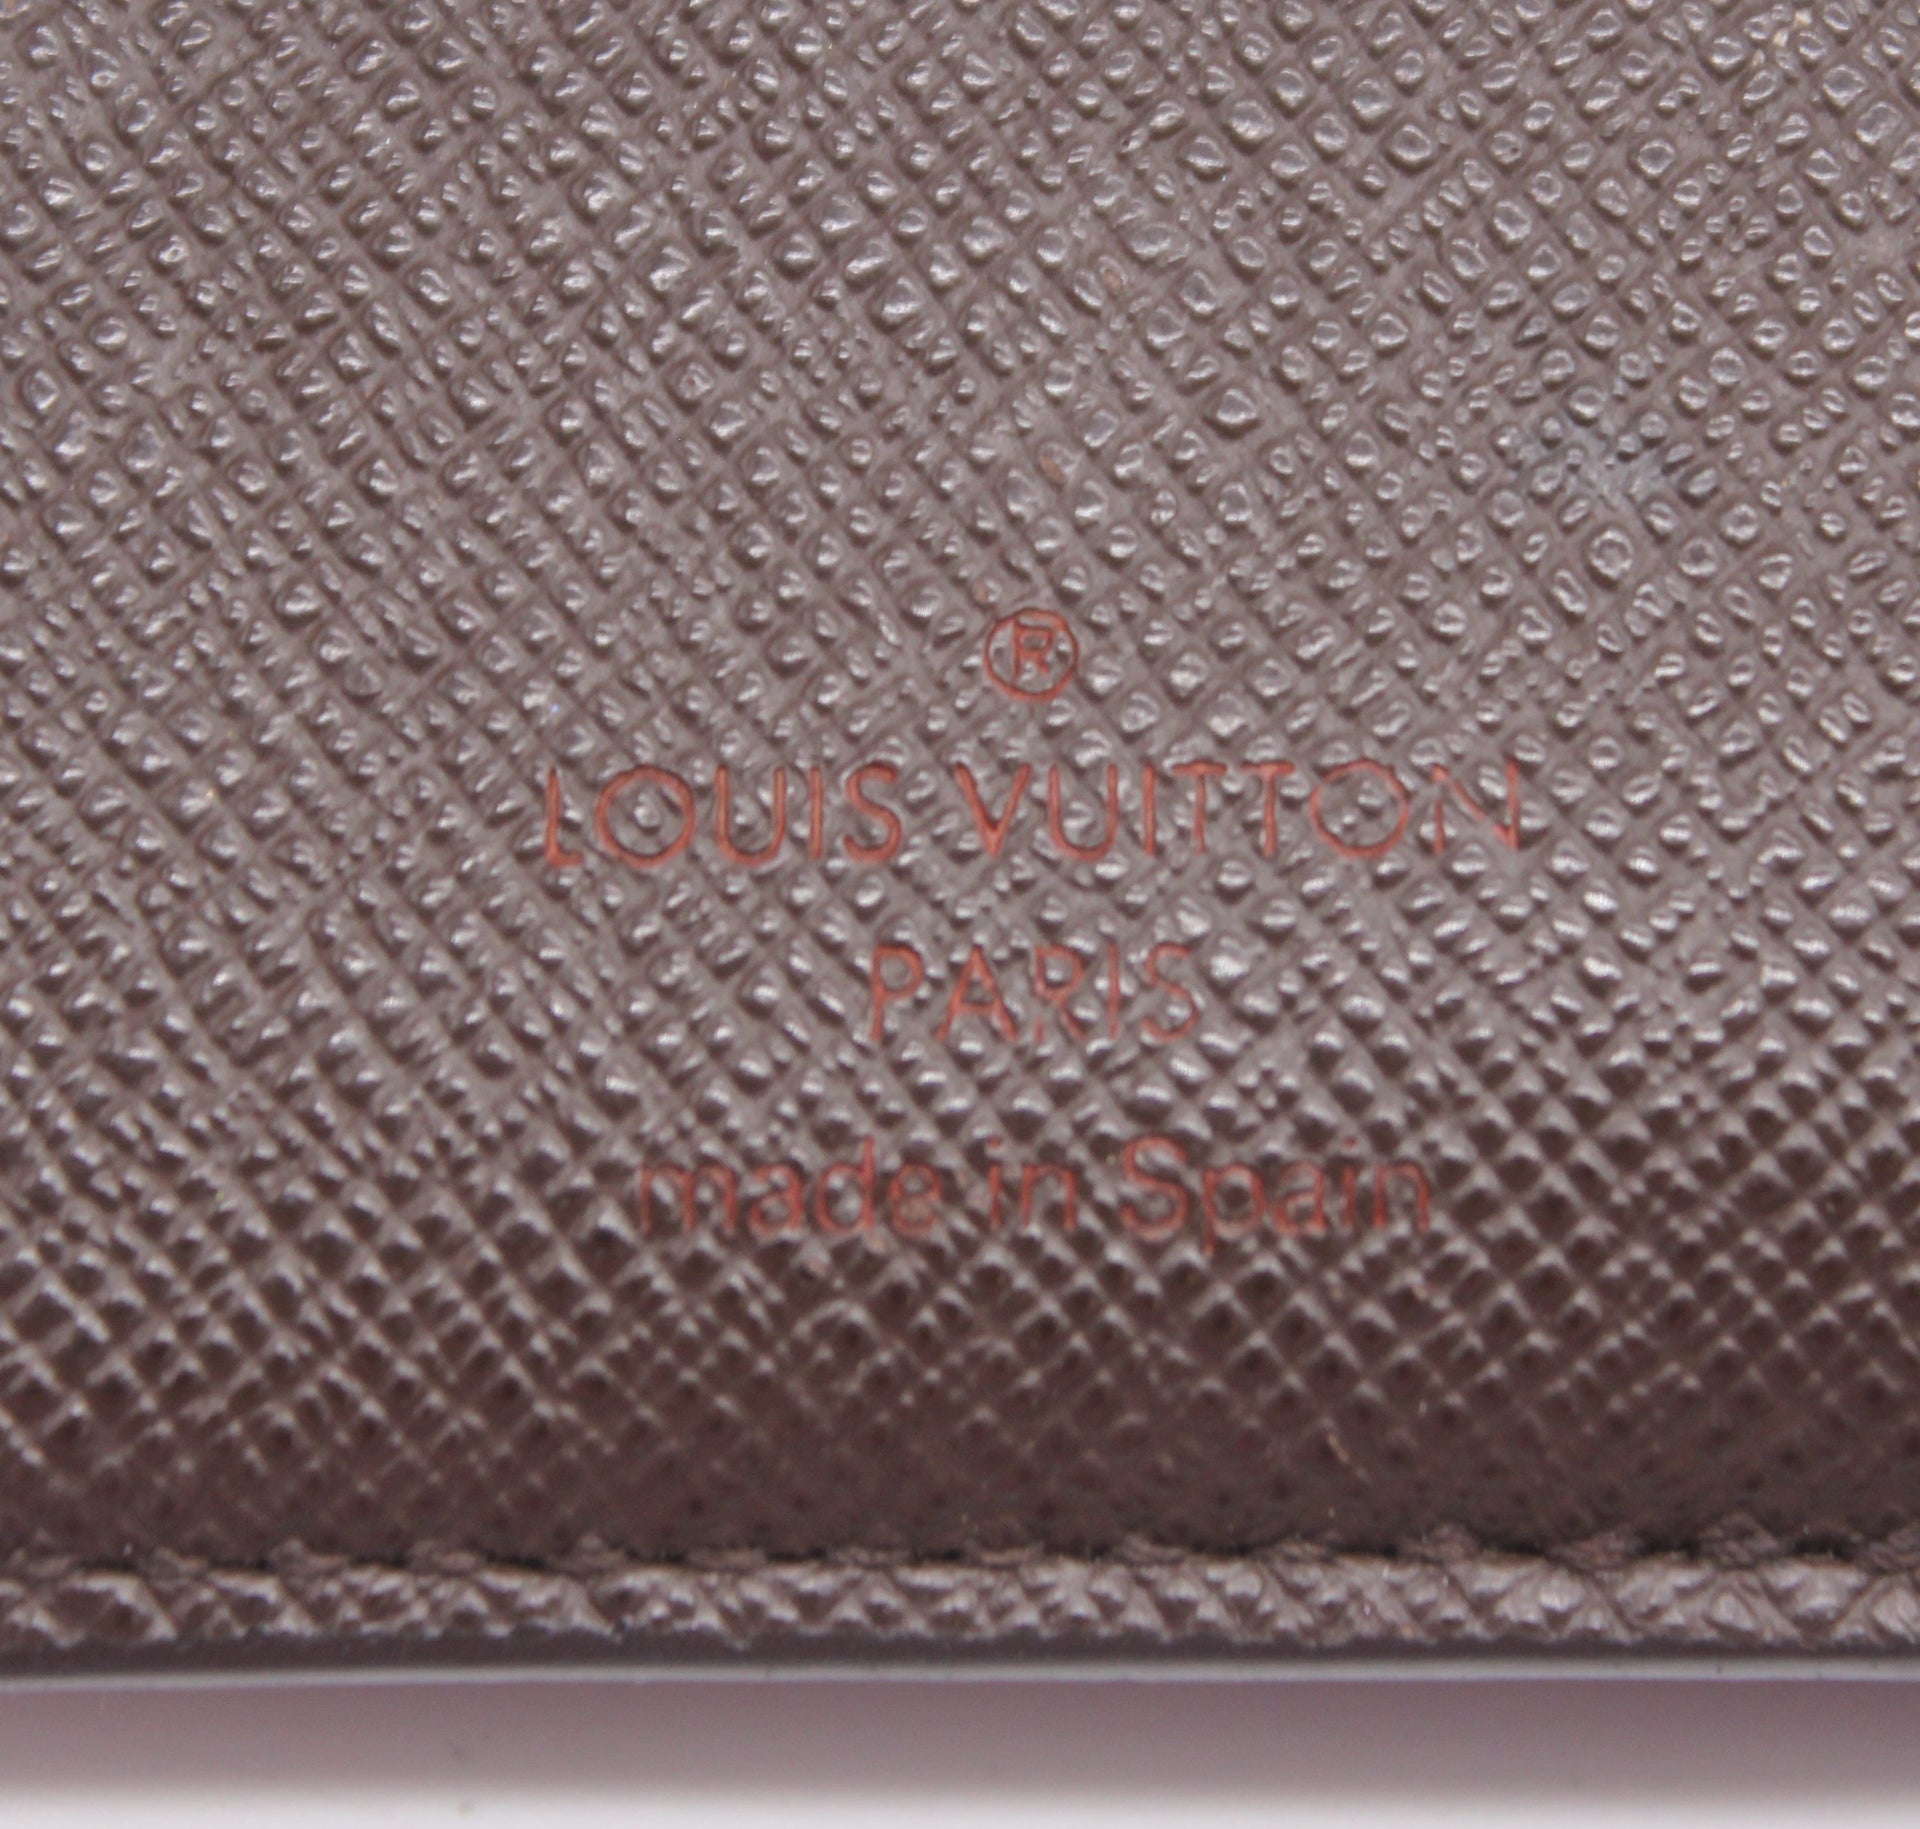 Louis Vuitton Damier French Purse Wallet